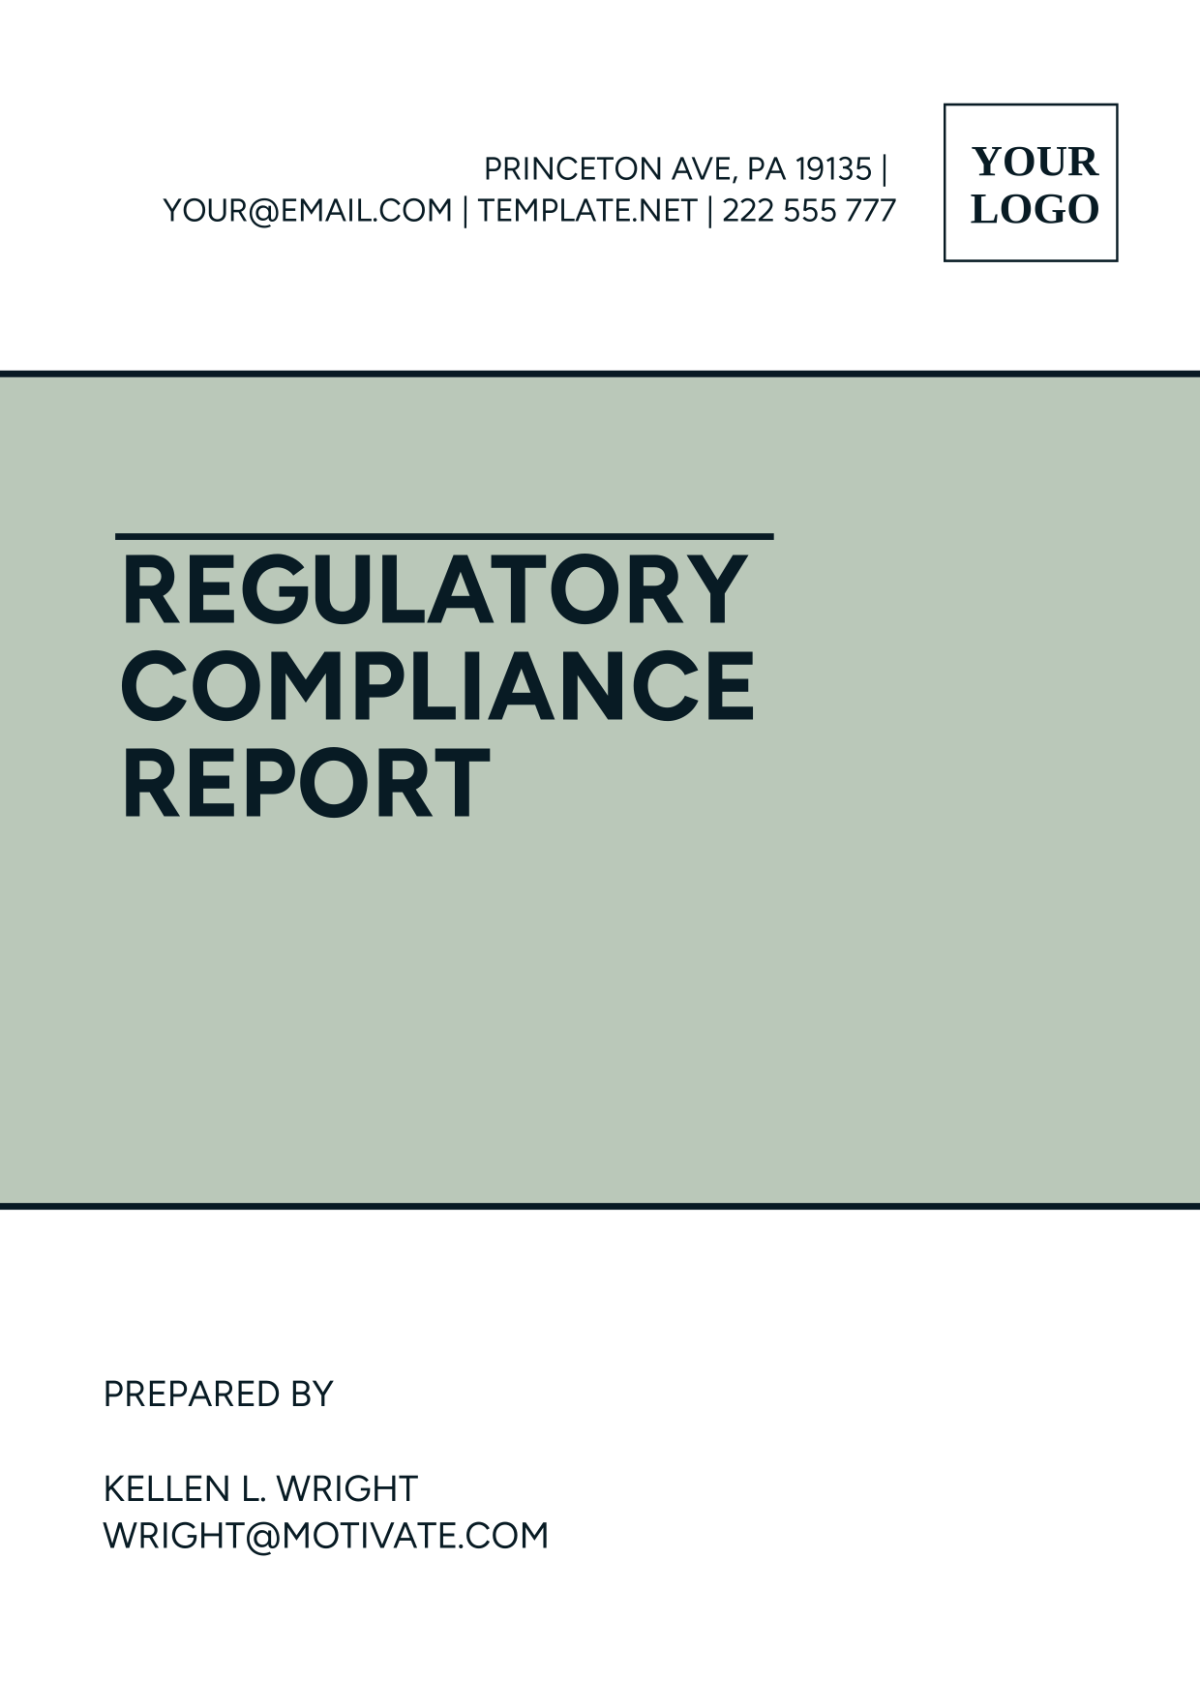 Regulatory Compliance Report Template